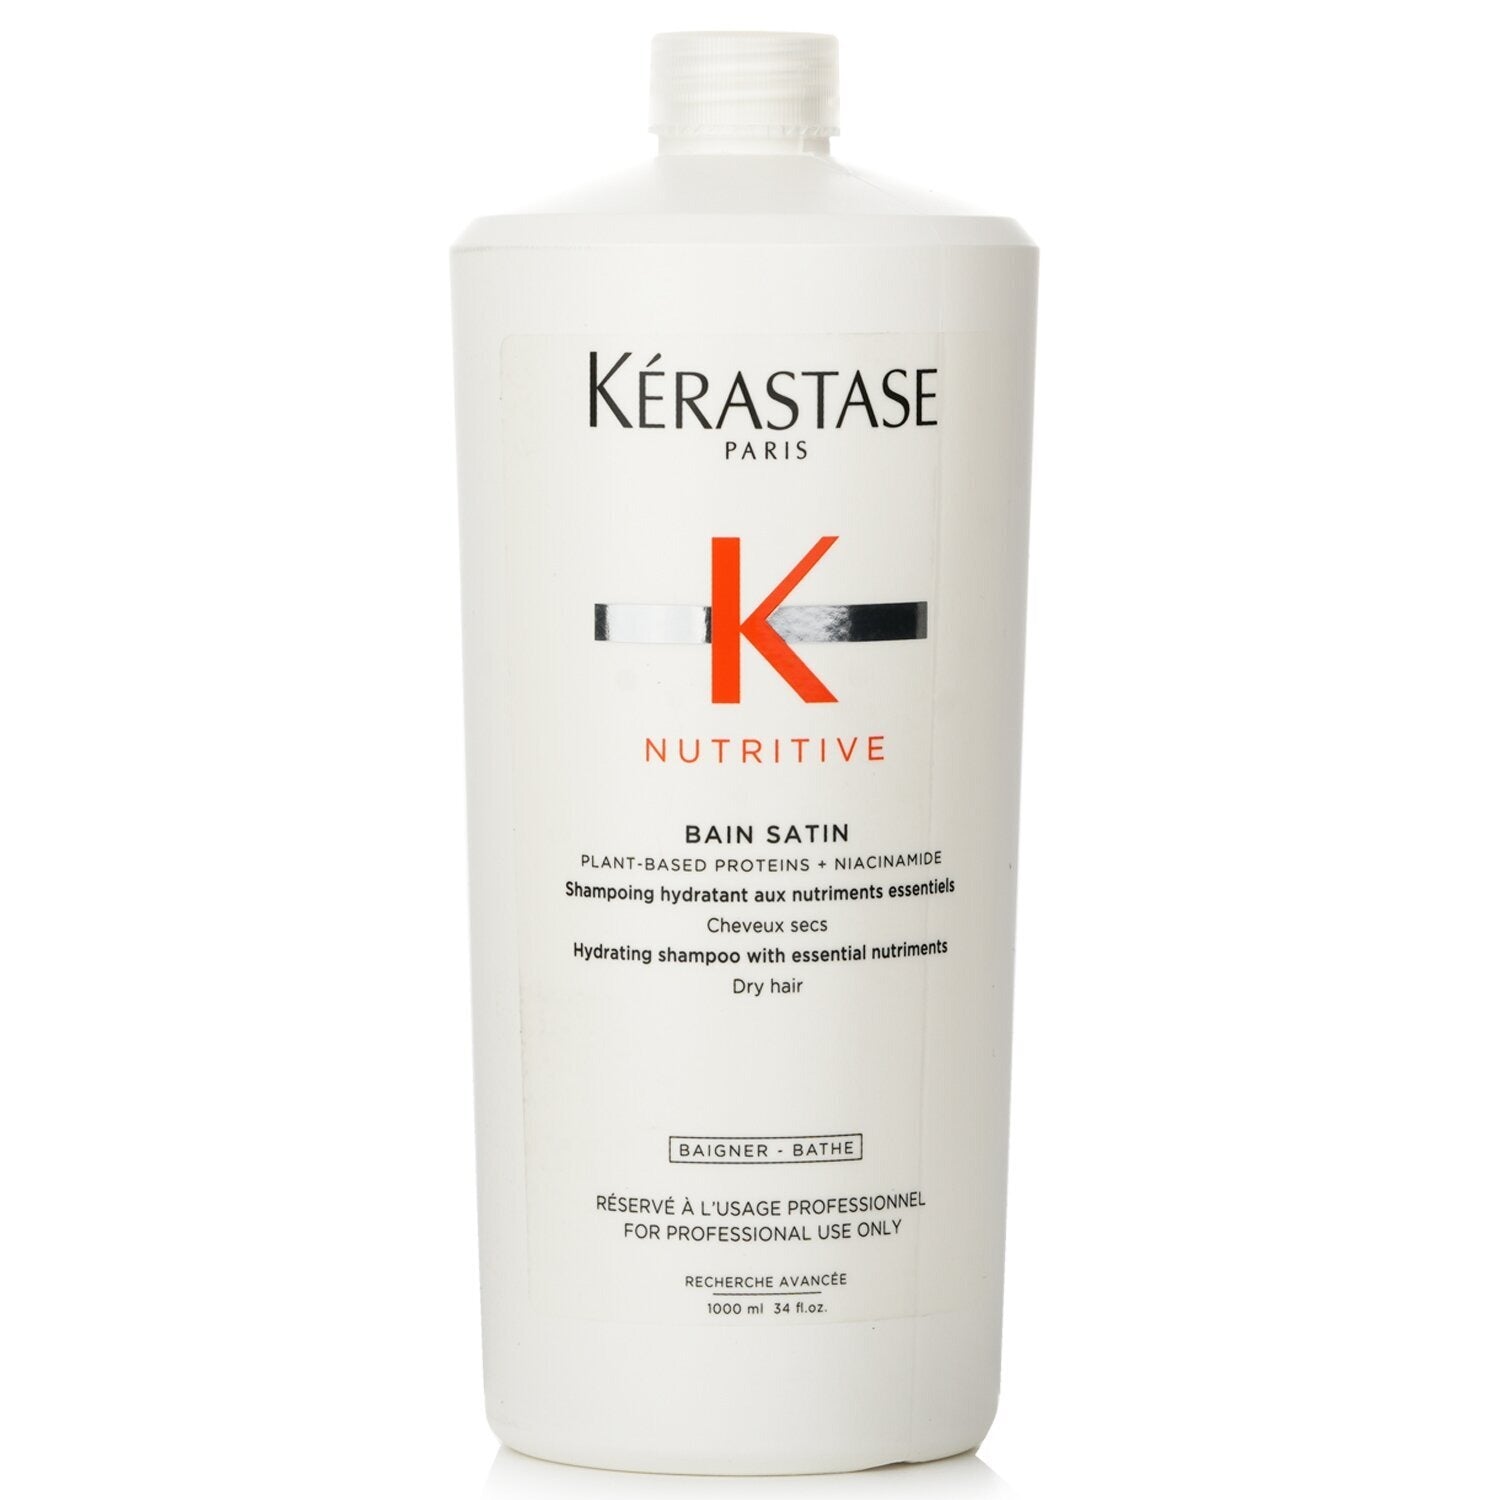 Kerastase Nutritive Bain Satin Shampoo for Dry Hair